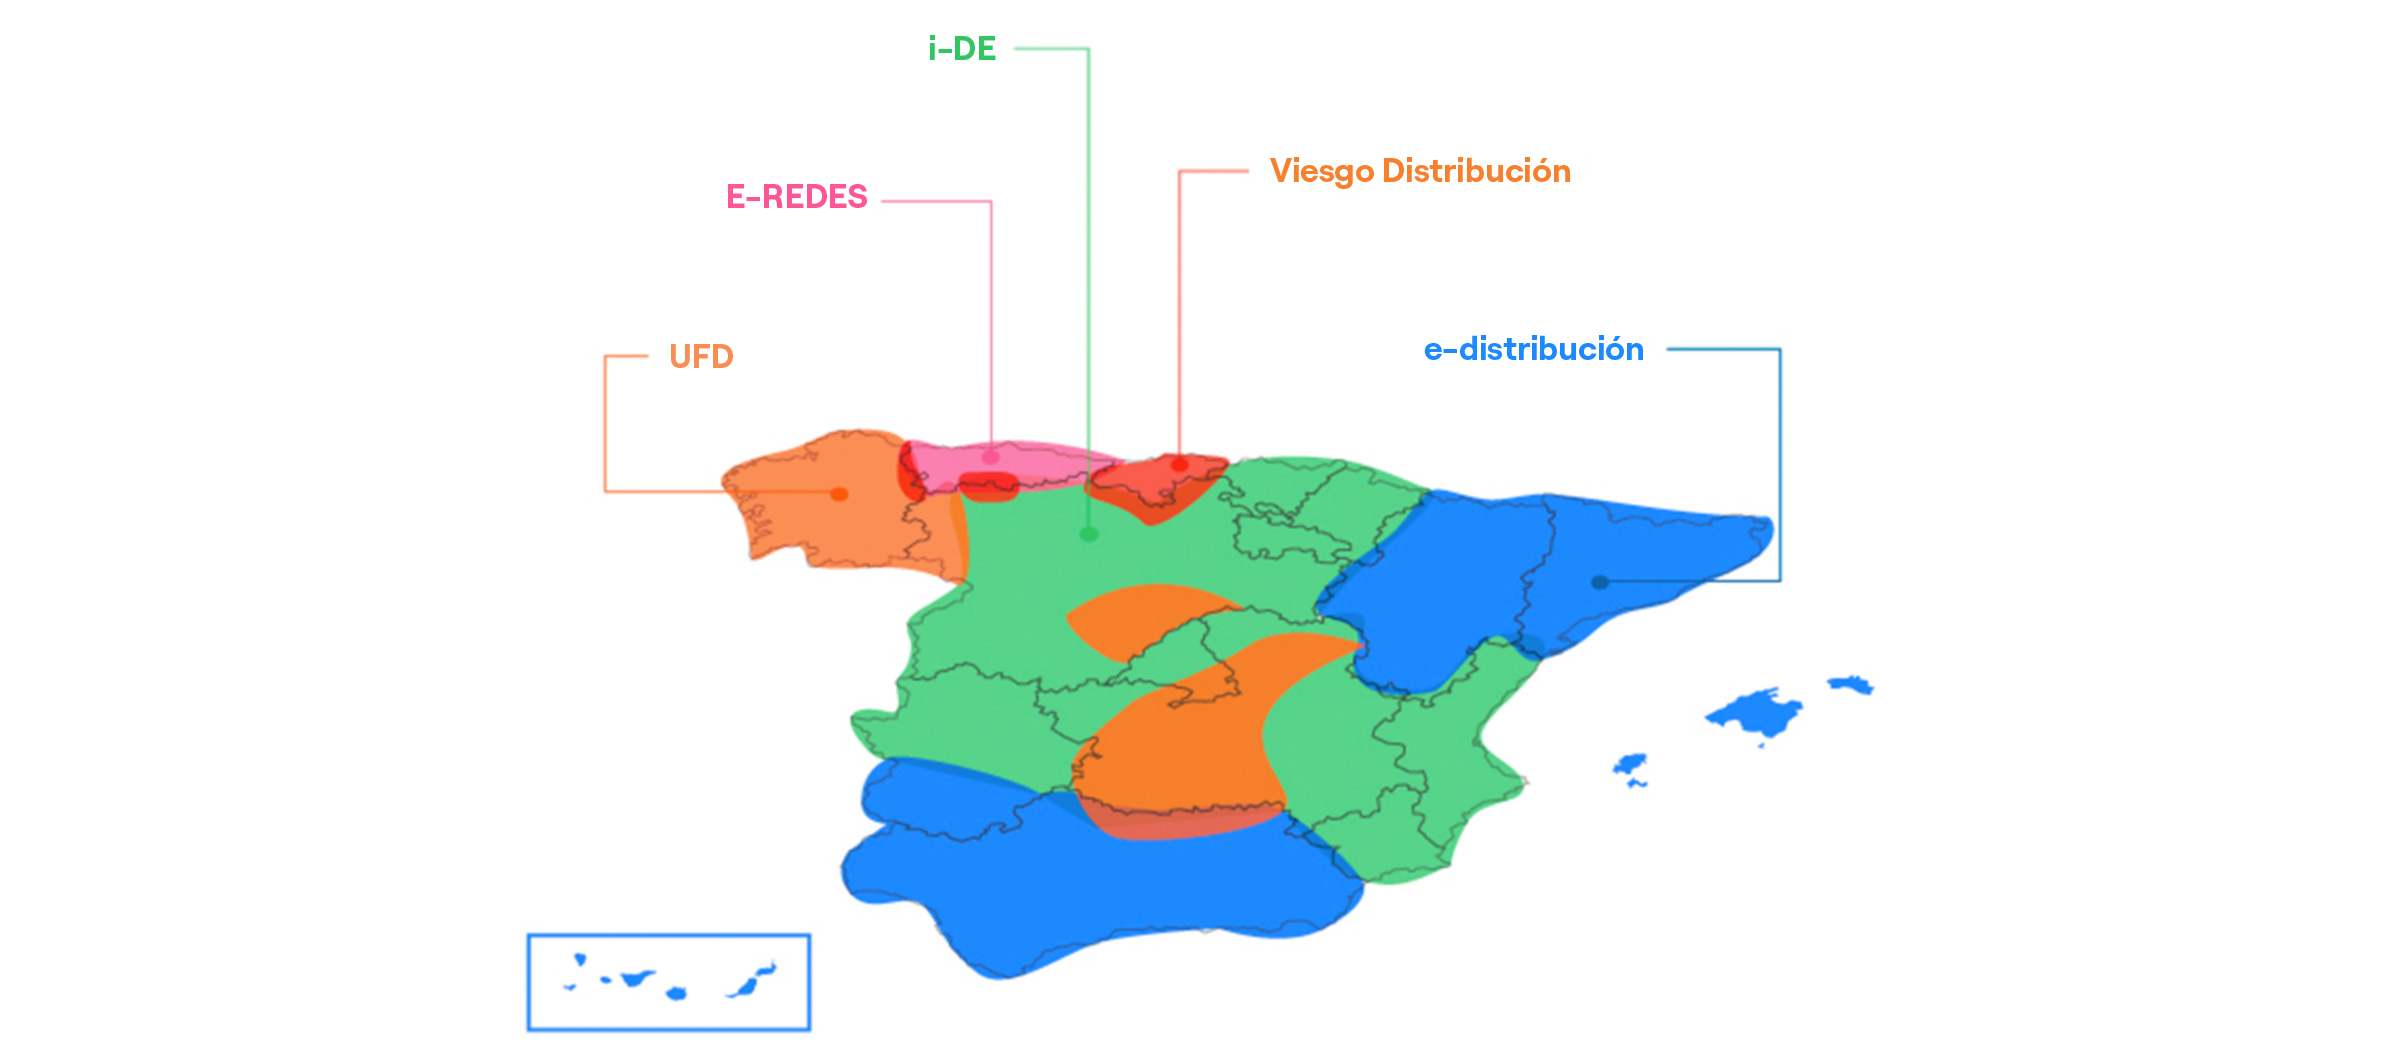 Mapa de España con las zonas correspondientes a cada distribuidora eléctrica.